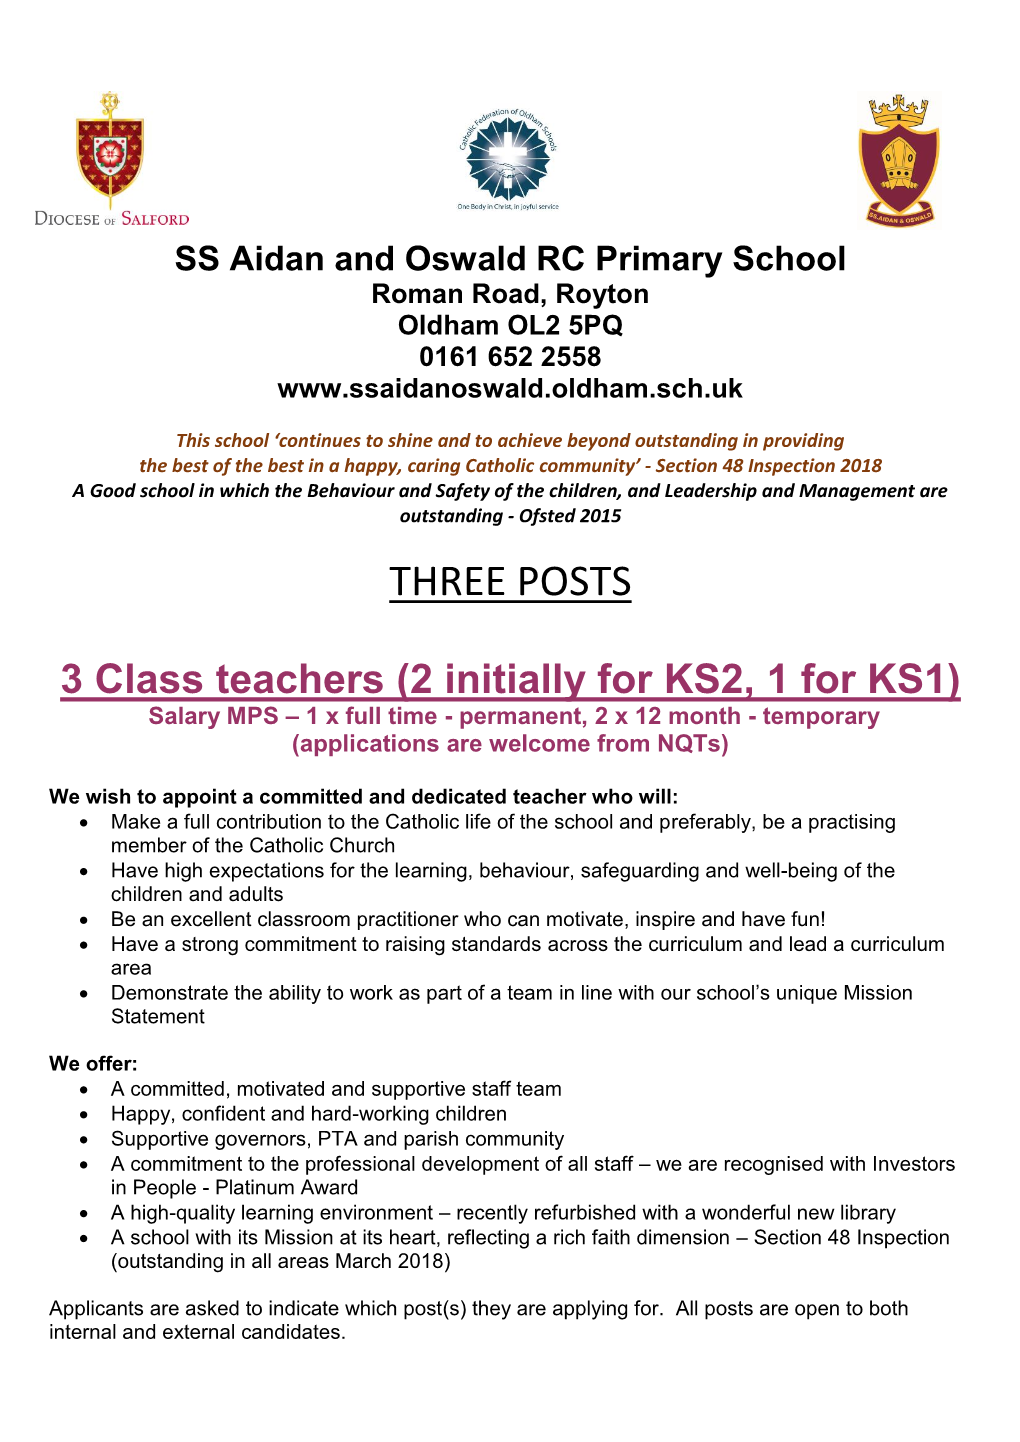 SS Aidan and Oswald RC Primary School Roman Road, Royton Oldham OL2 5PQ 0161 652 2558